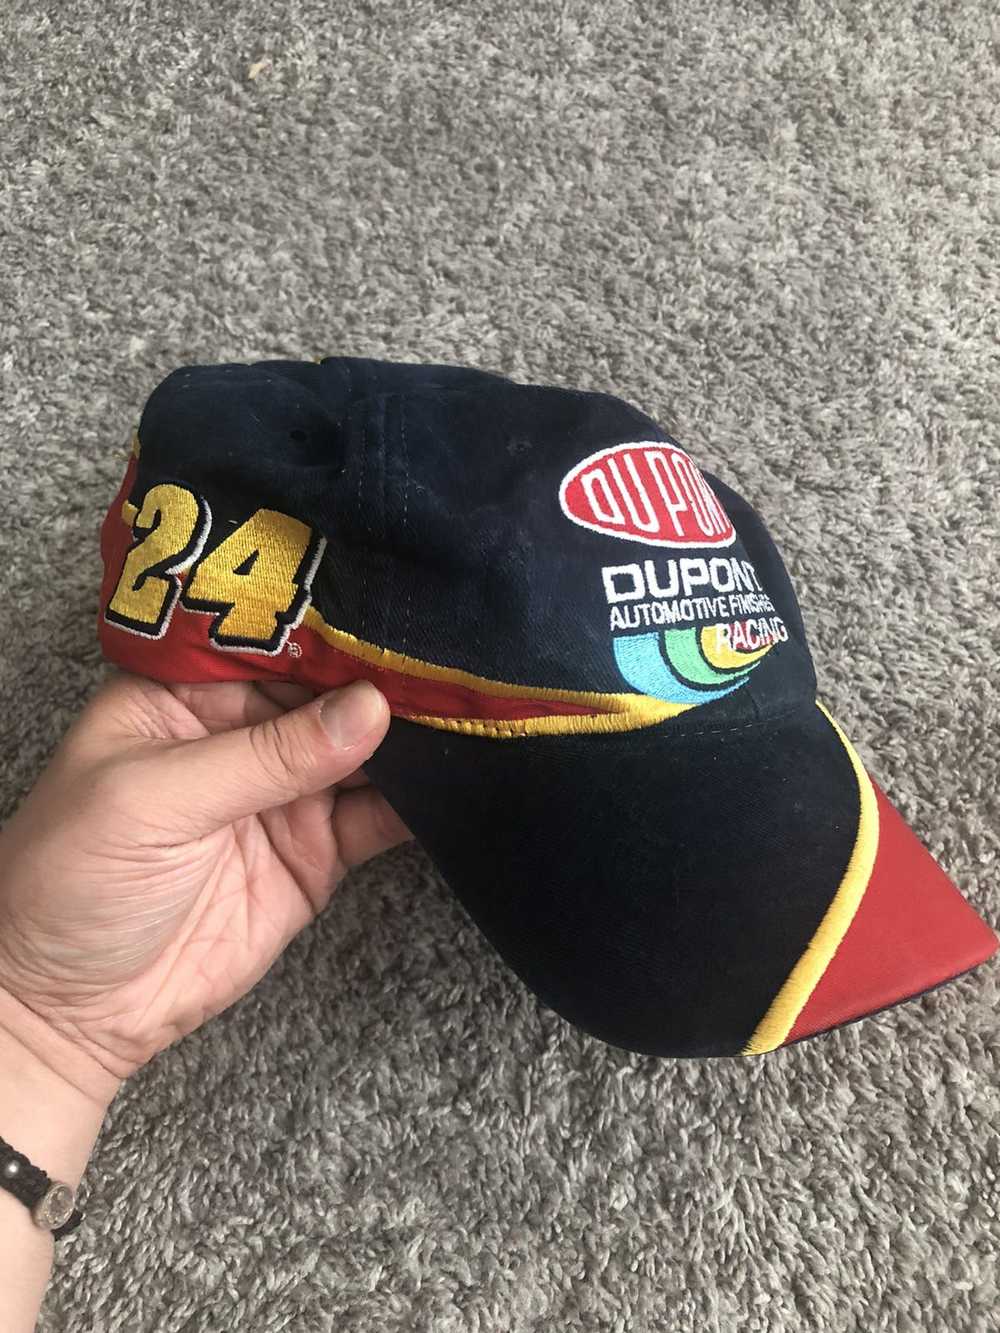 Vintage NASCAR Jeff Gordon Racing Hat - image 2